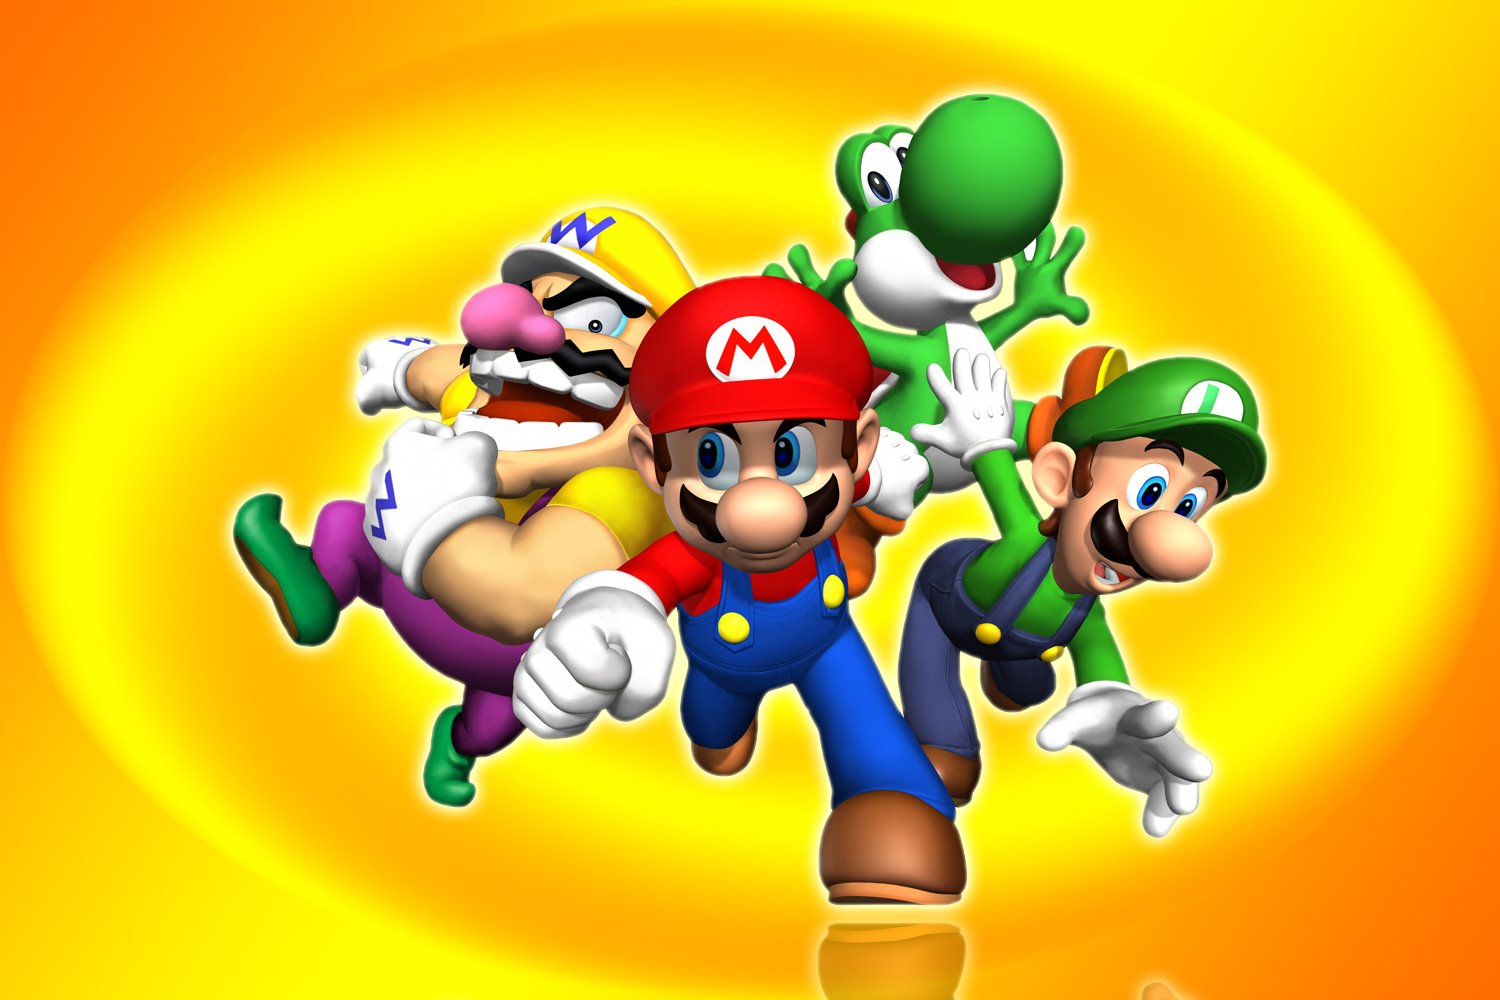 Mario brothers. Супер Марио супермарио. Супер Марио герои игры. Марио (персонаж игр). Супер братья Марио игра.